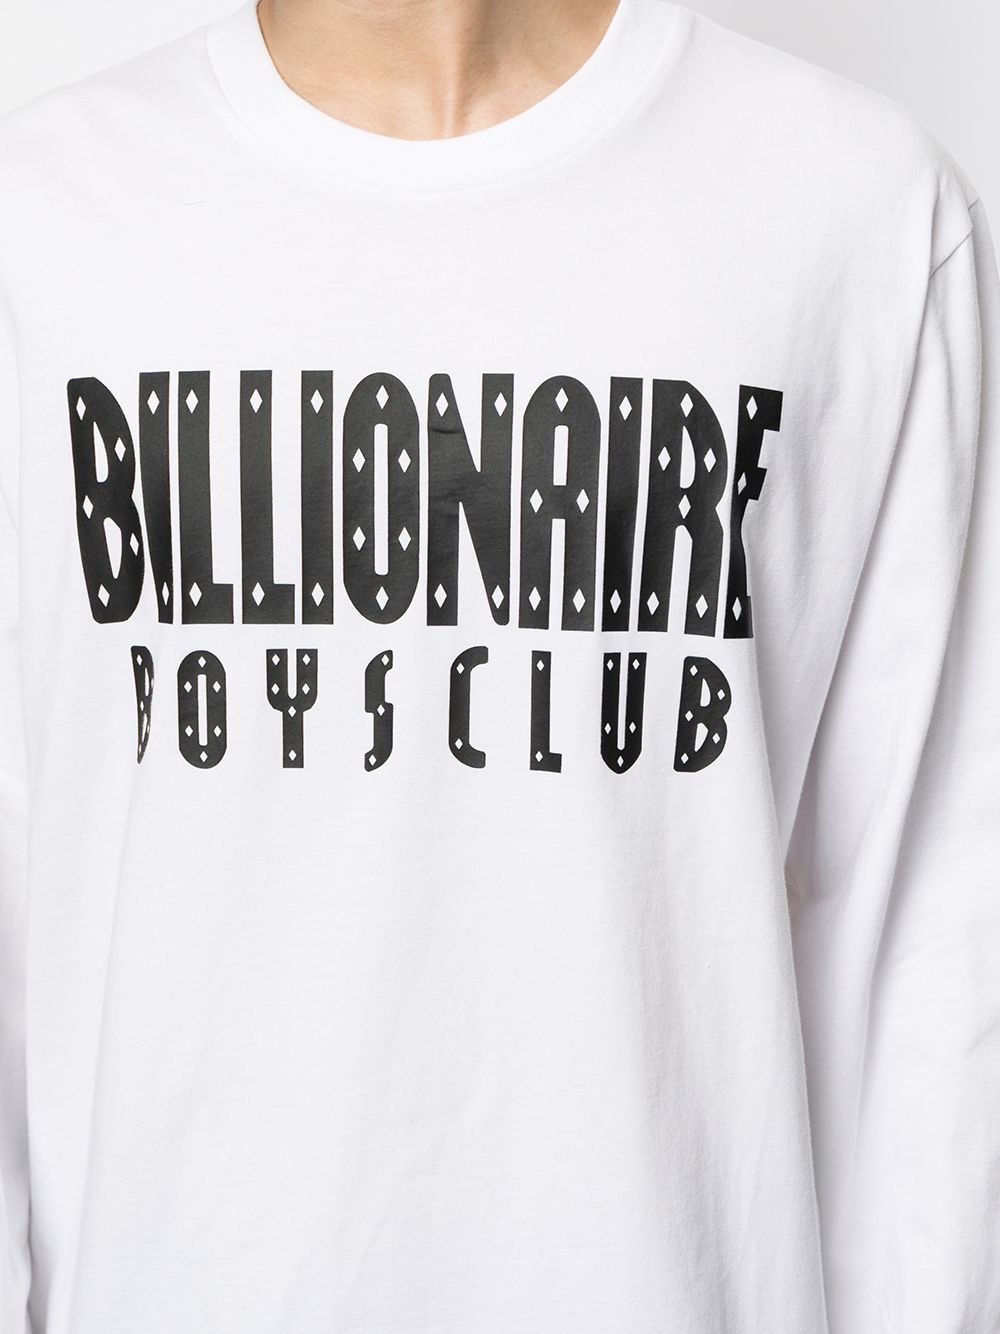 фото Billionaire boys club футболка с принтом